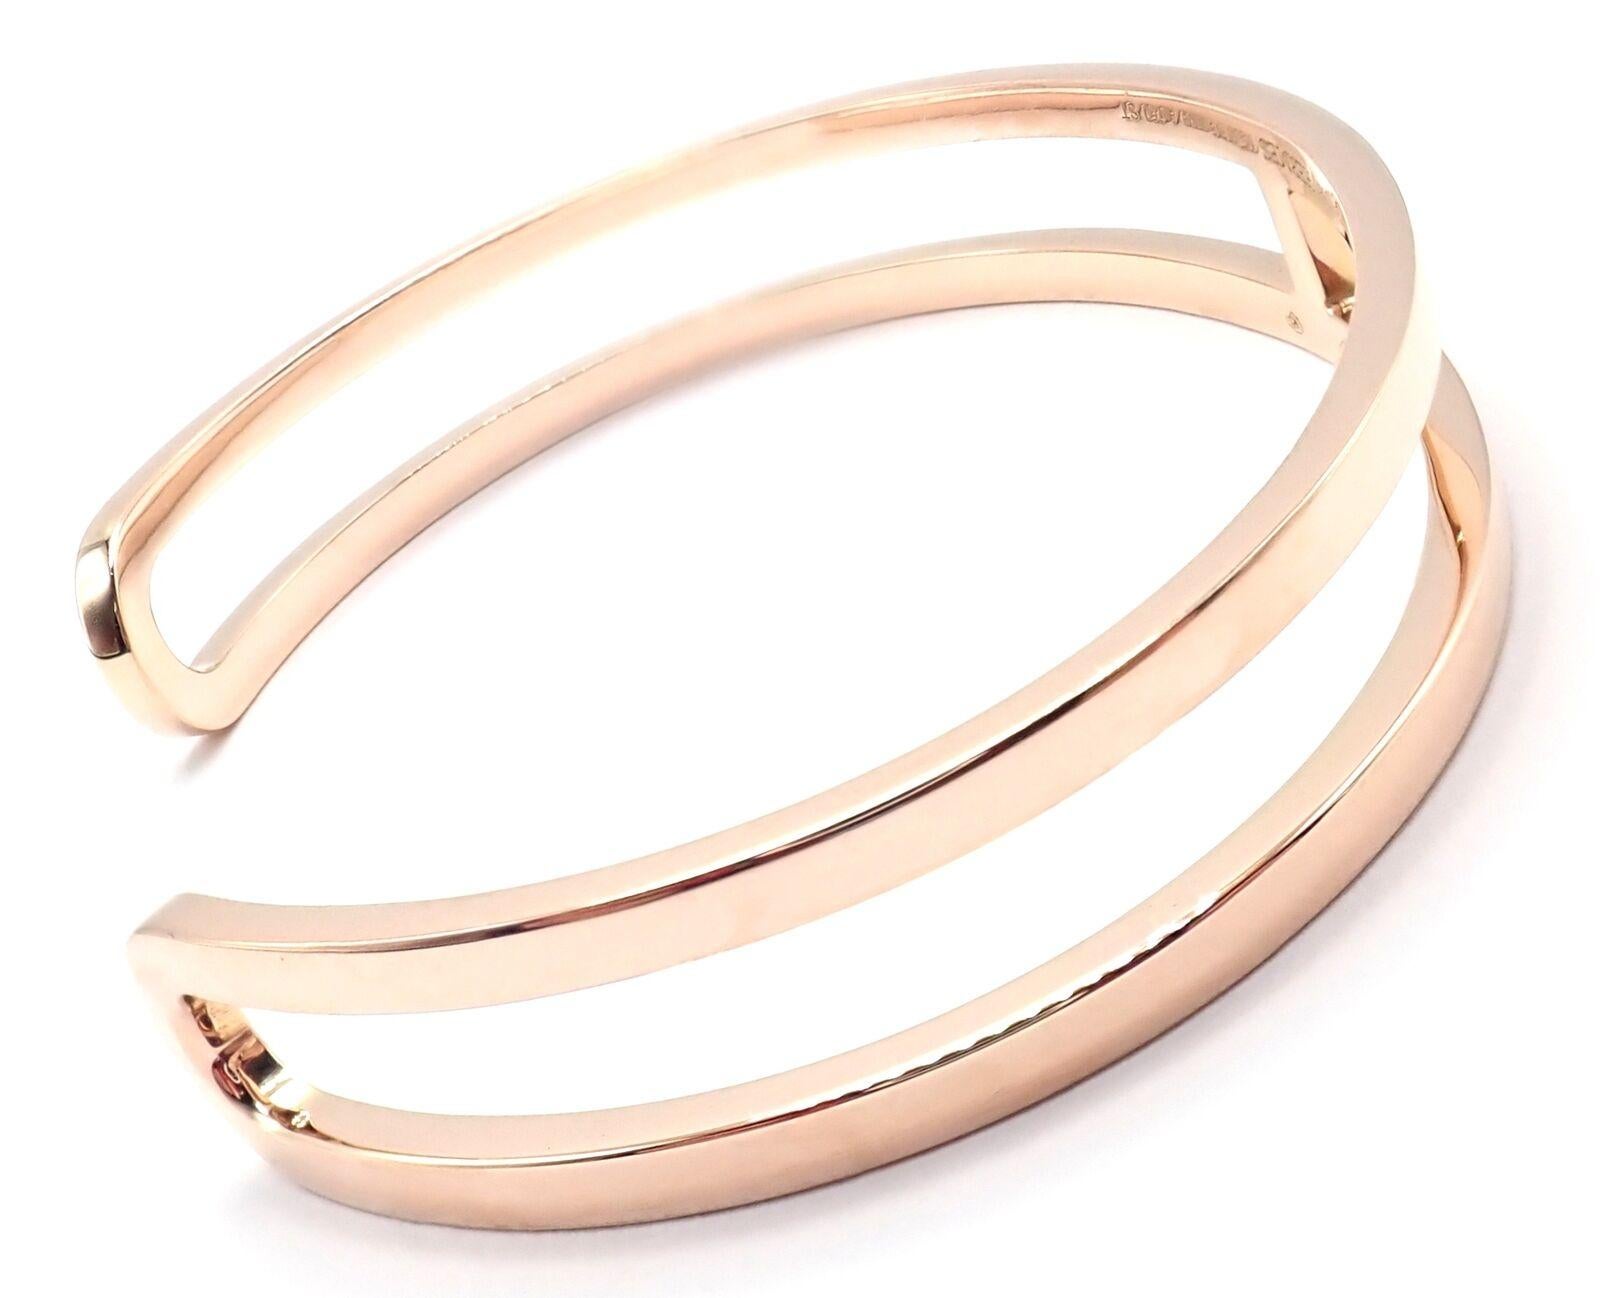 18k Rose Gold H Open Cuff Bangle Bracelet by Hermes. 
This bracelet is size ST Length: 6.46